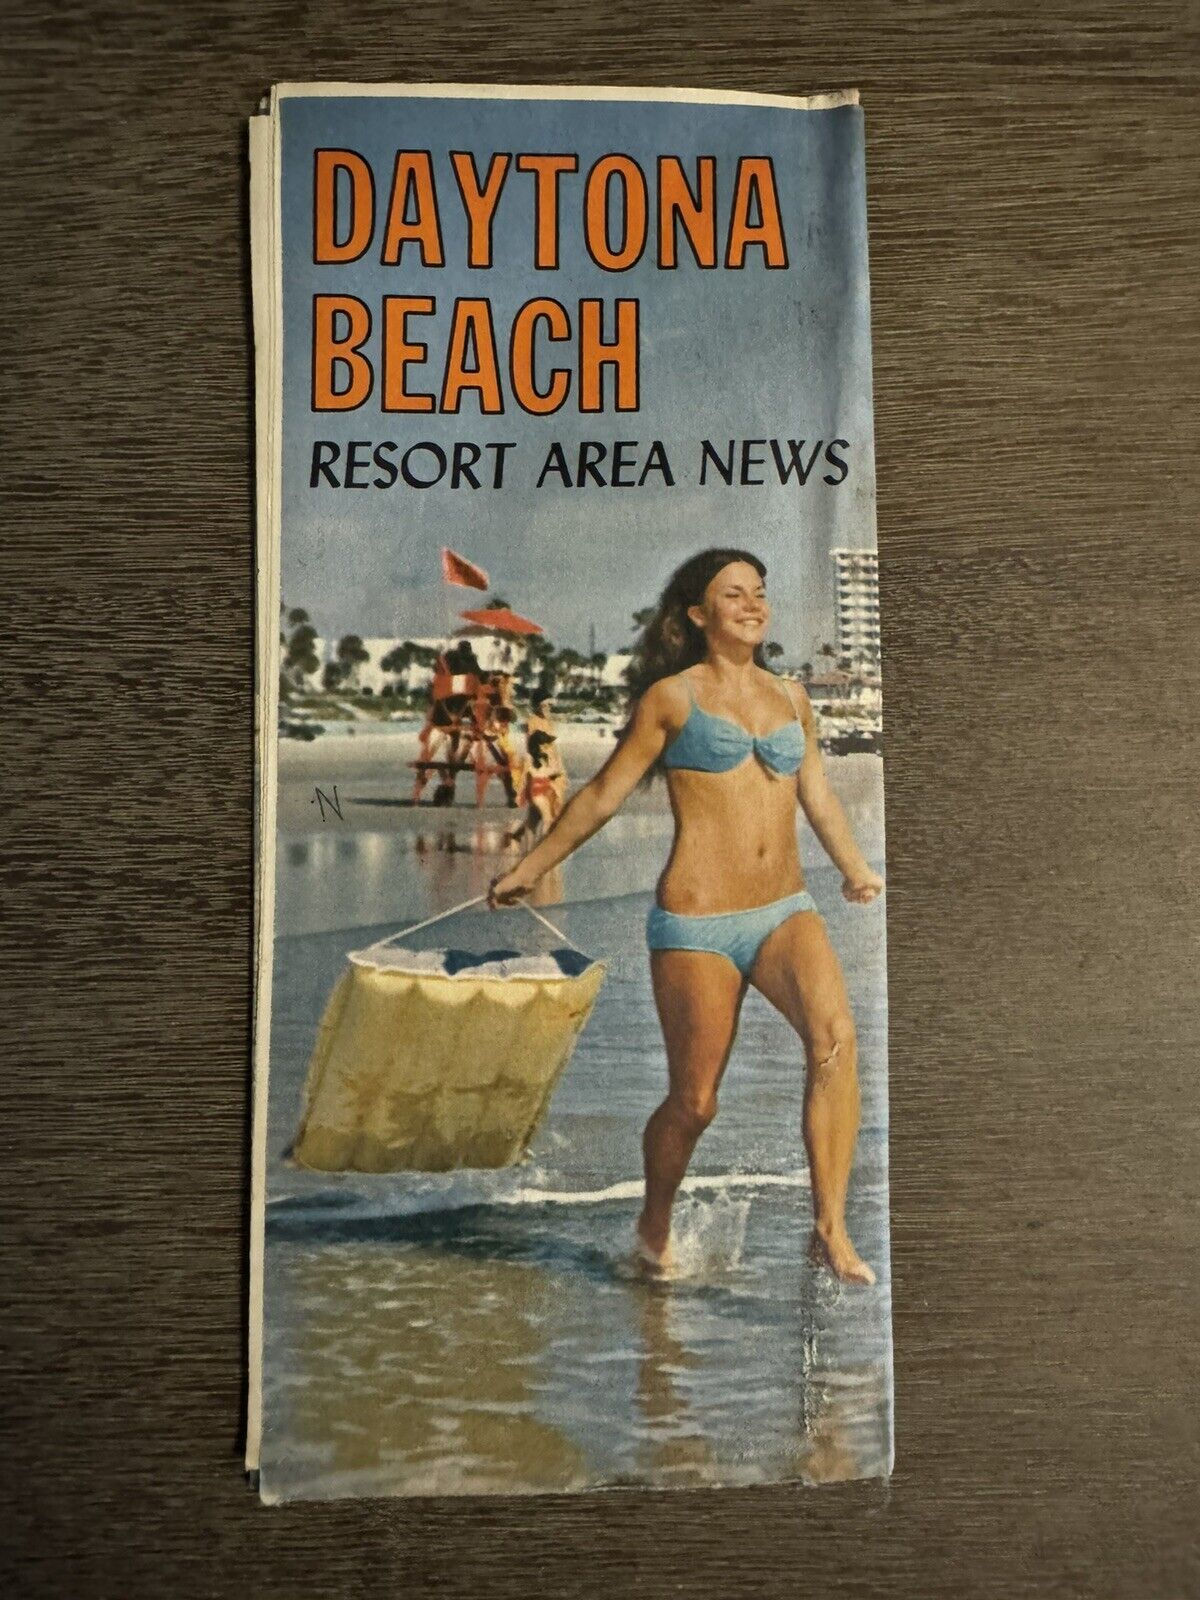 Vintage Daytona Beach Resort News Daytona Beach, Florida Tourist Brochure 1971